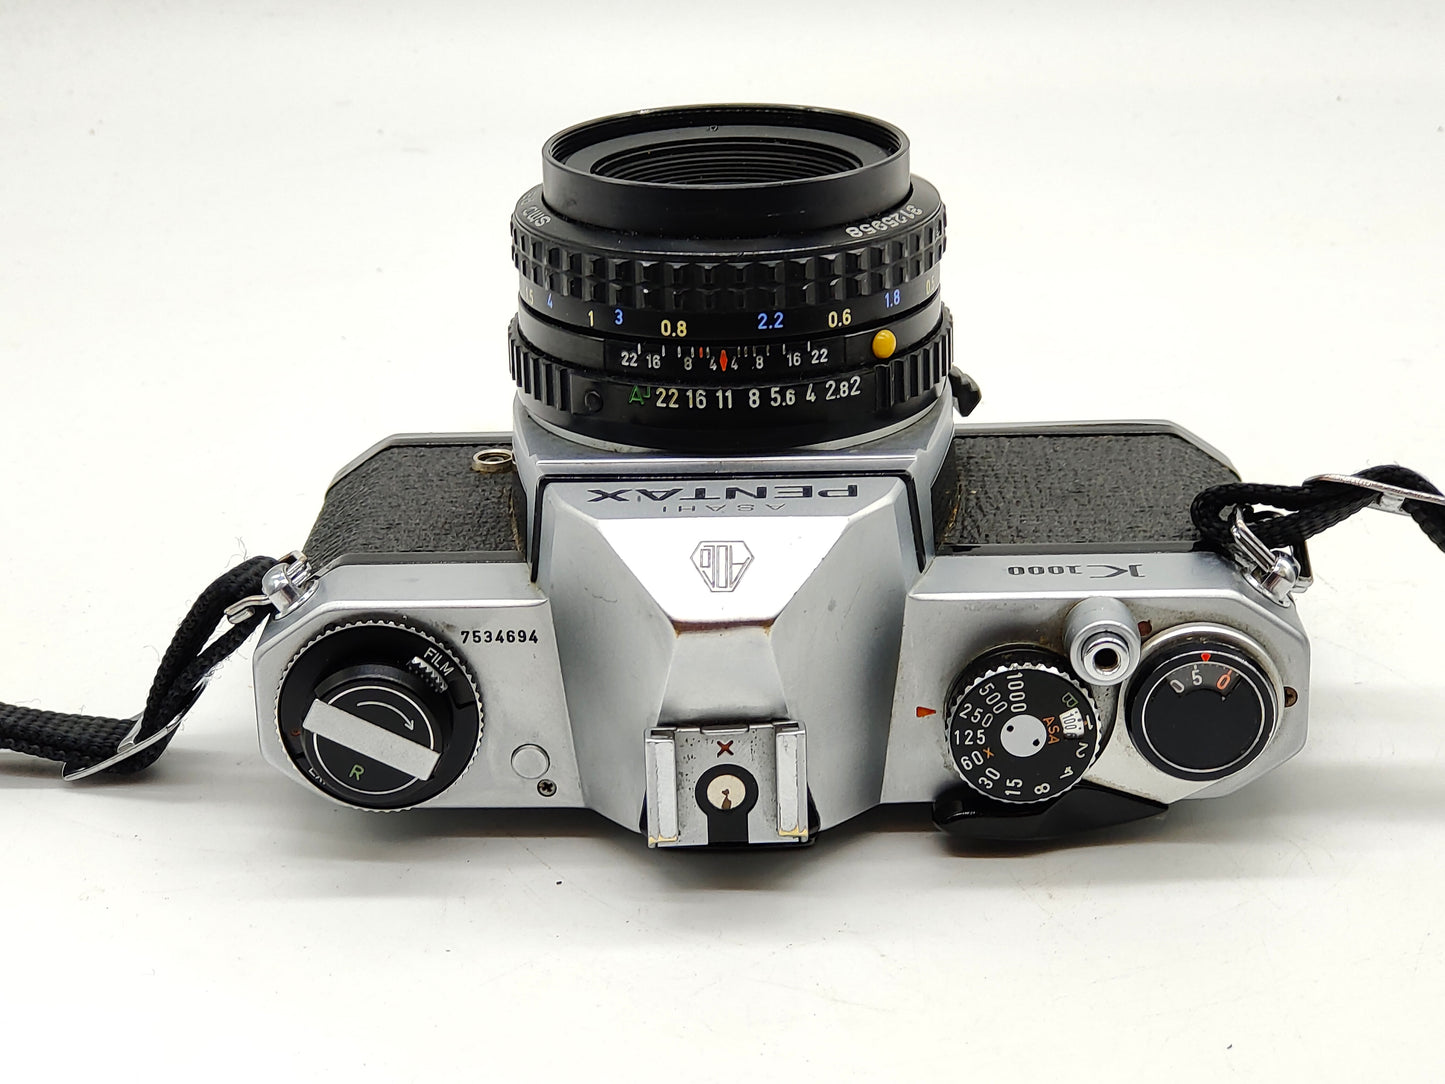 Pentax K1000 SLR film camera with 50mm f/2.0 lens